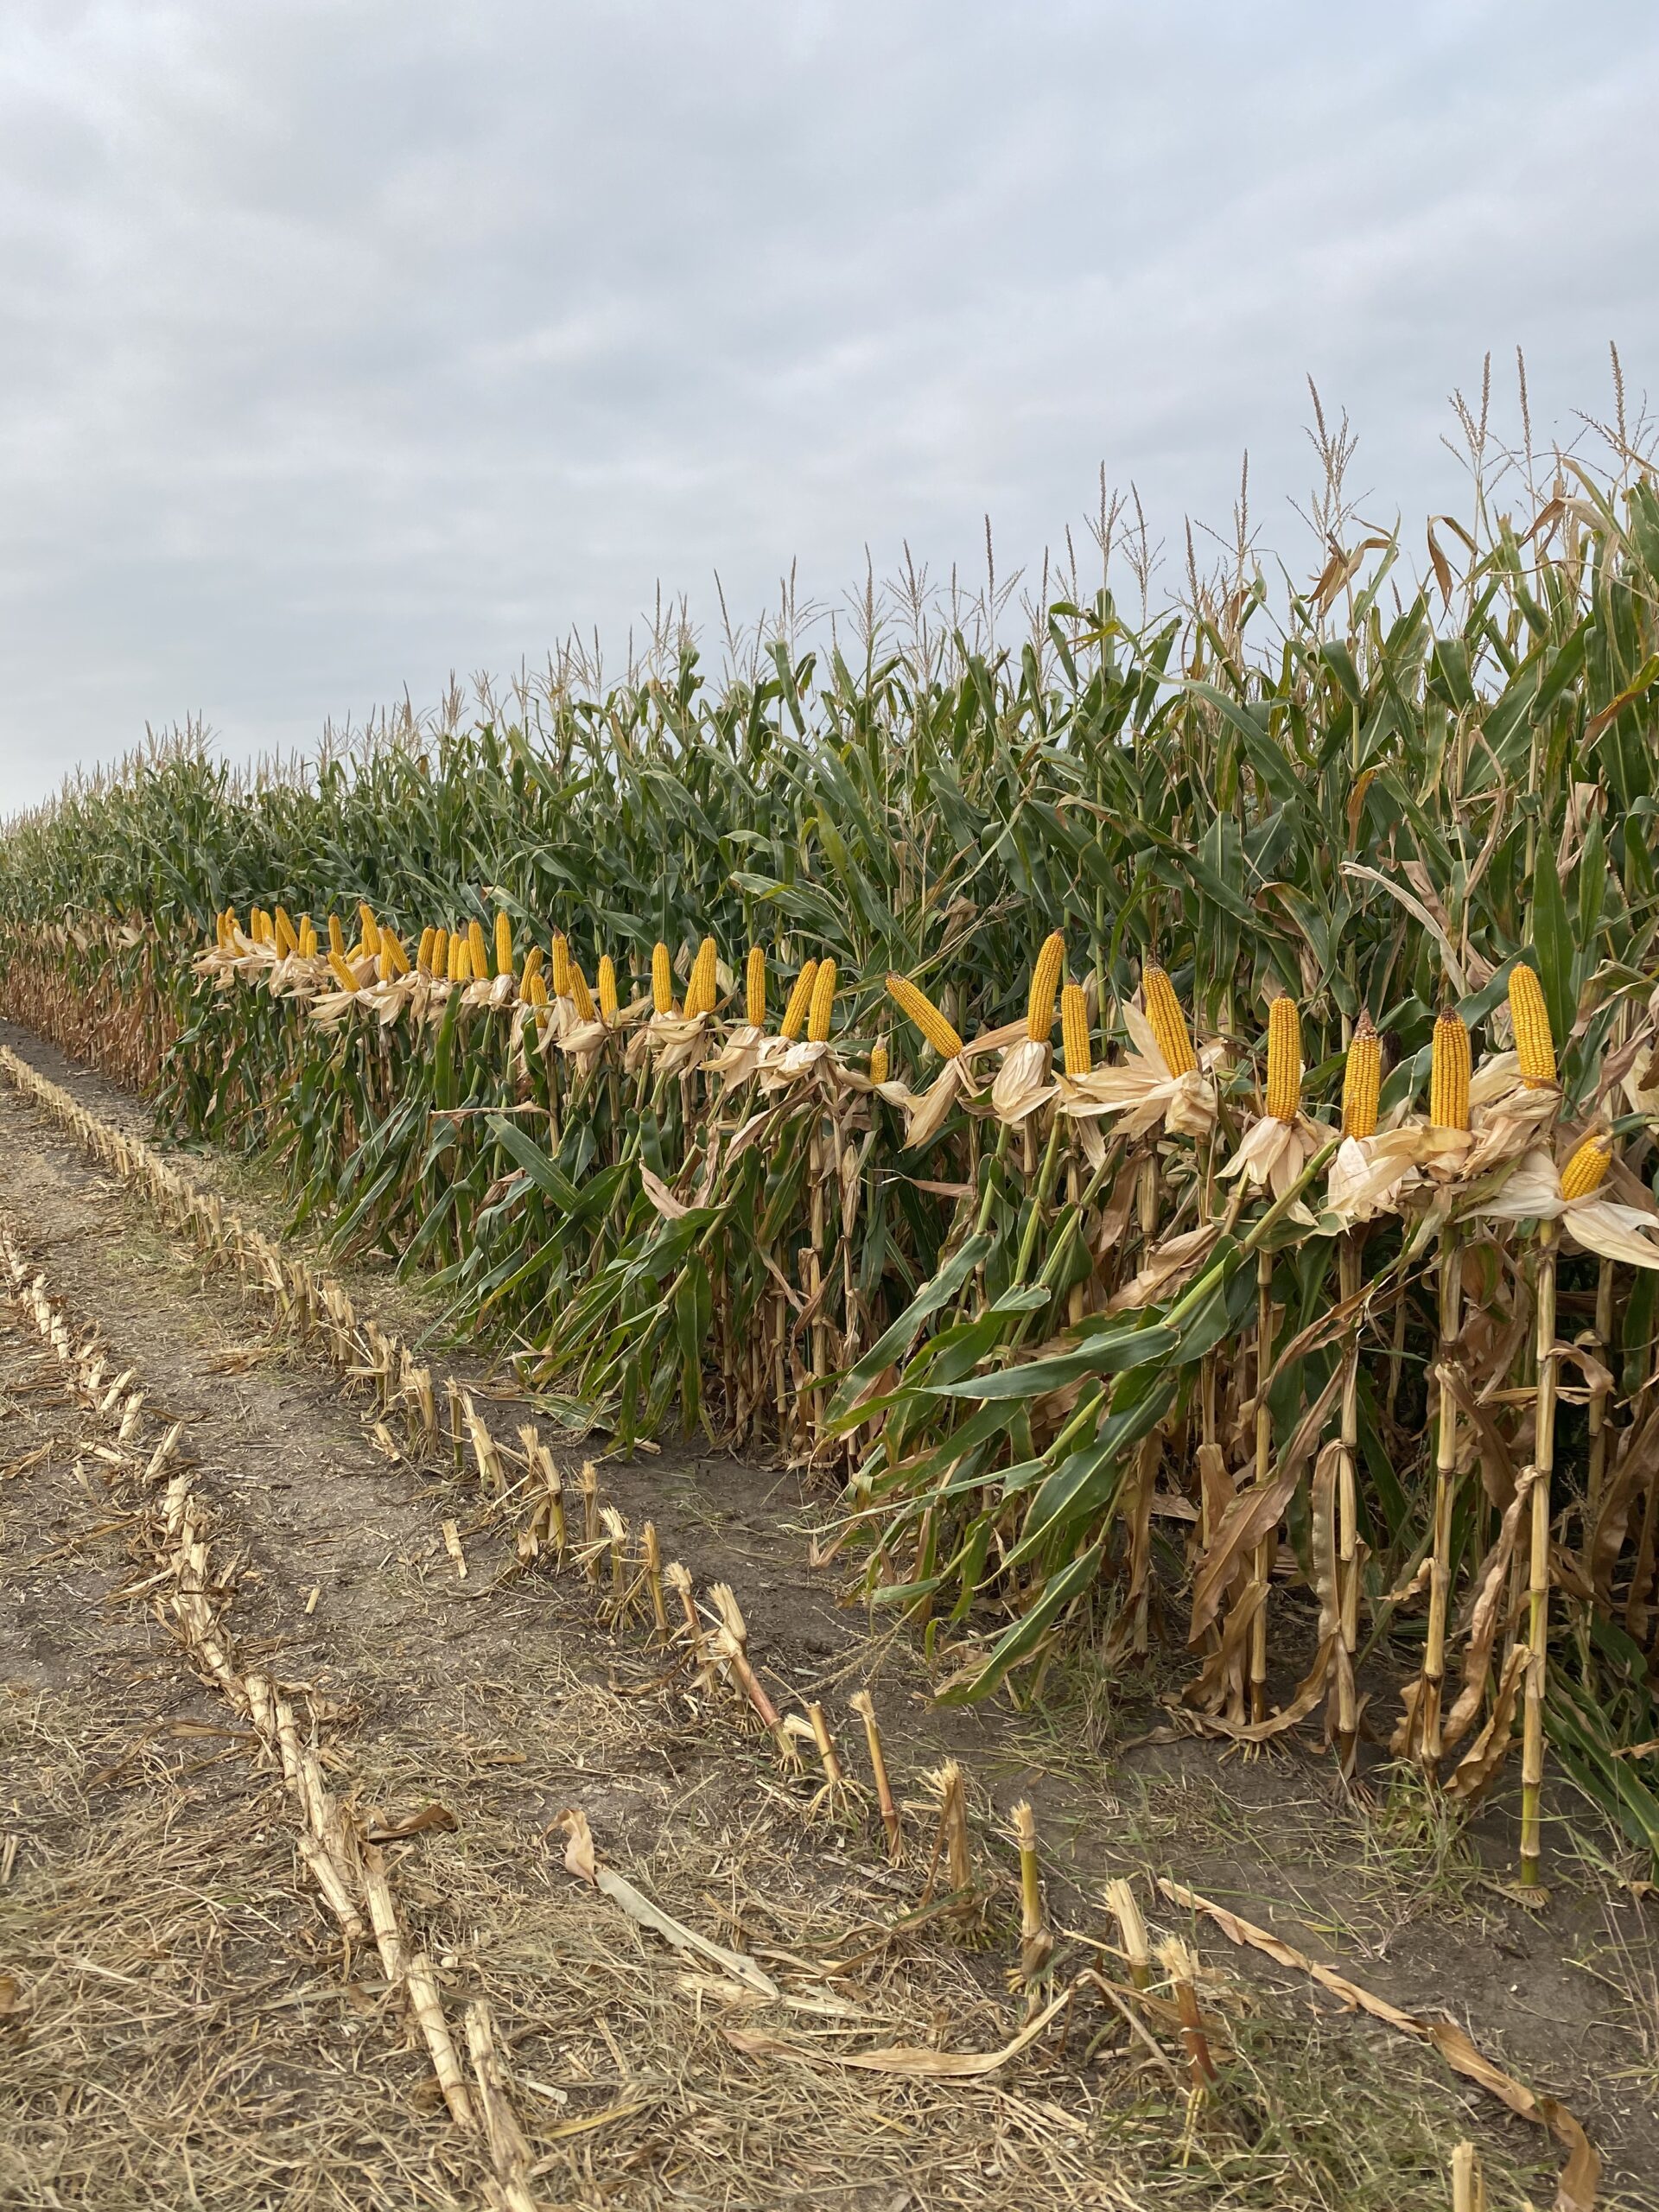 Hefty Brand Corn on Chad Kehn's farm